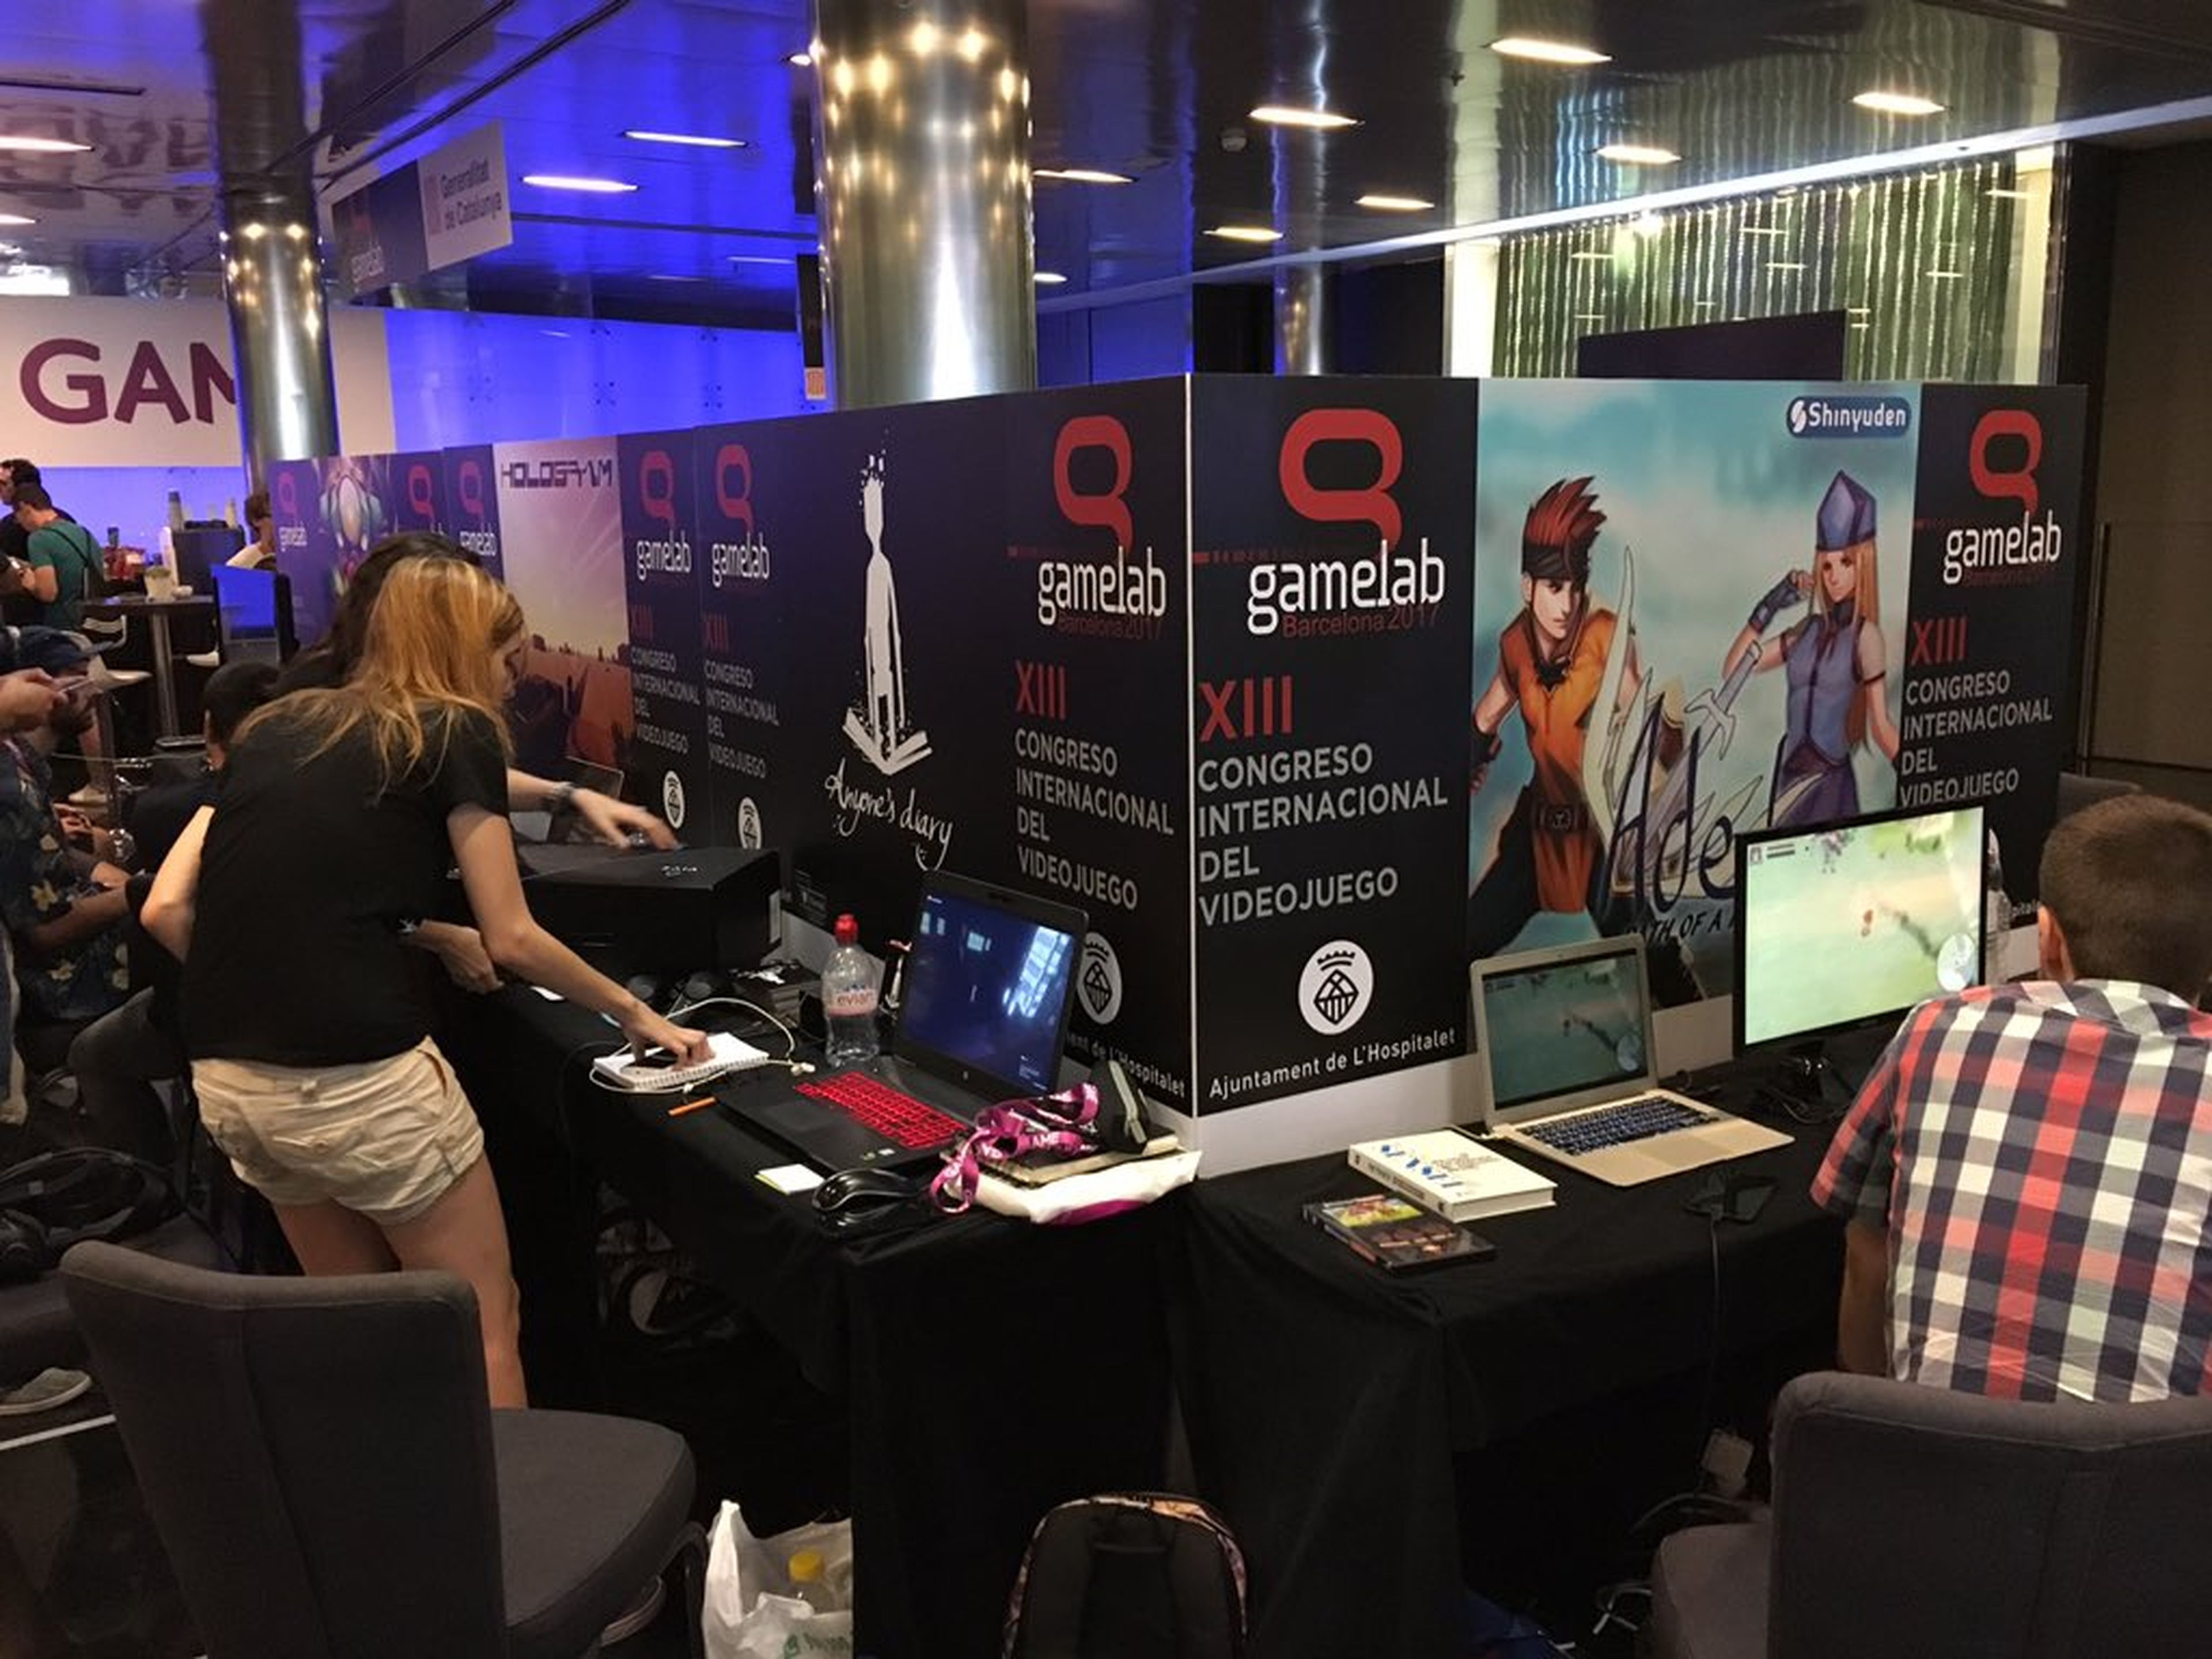 Gamelab 2017